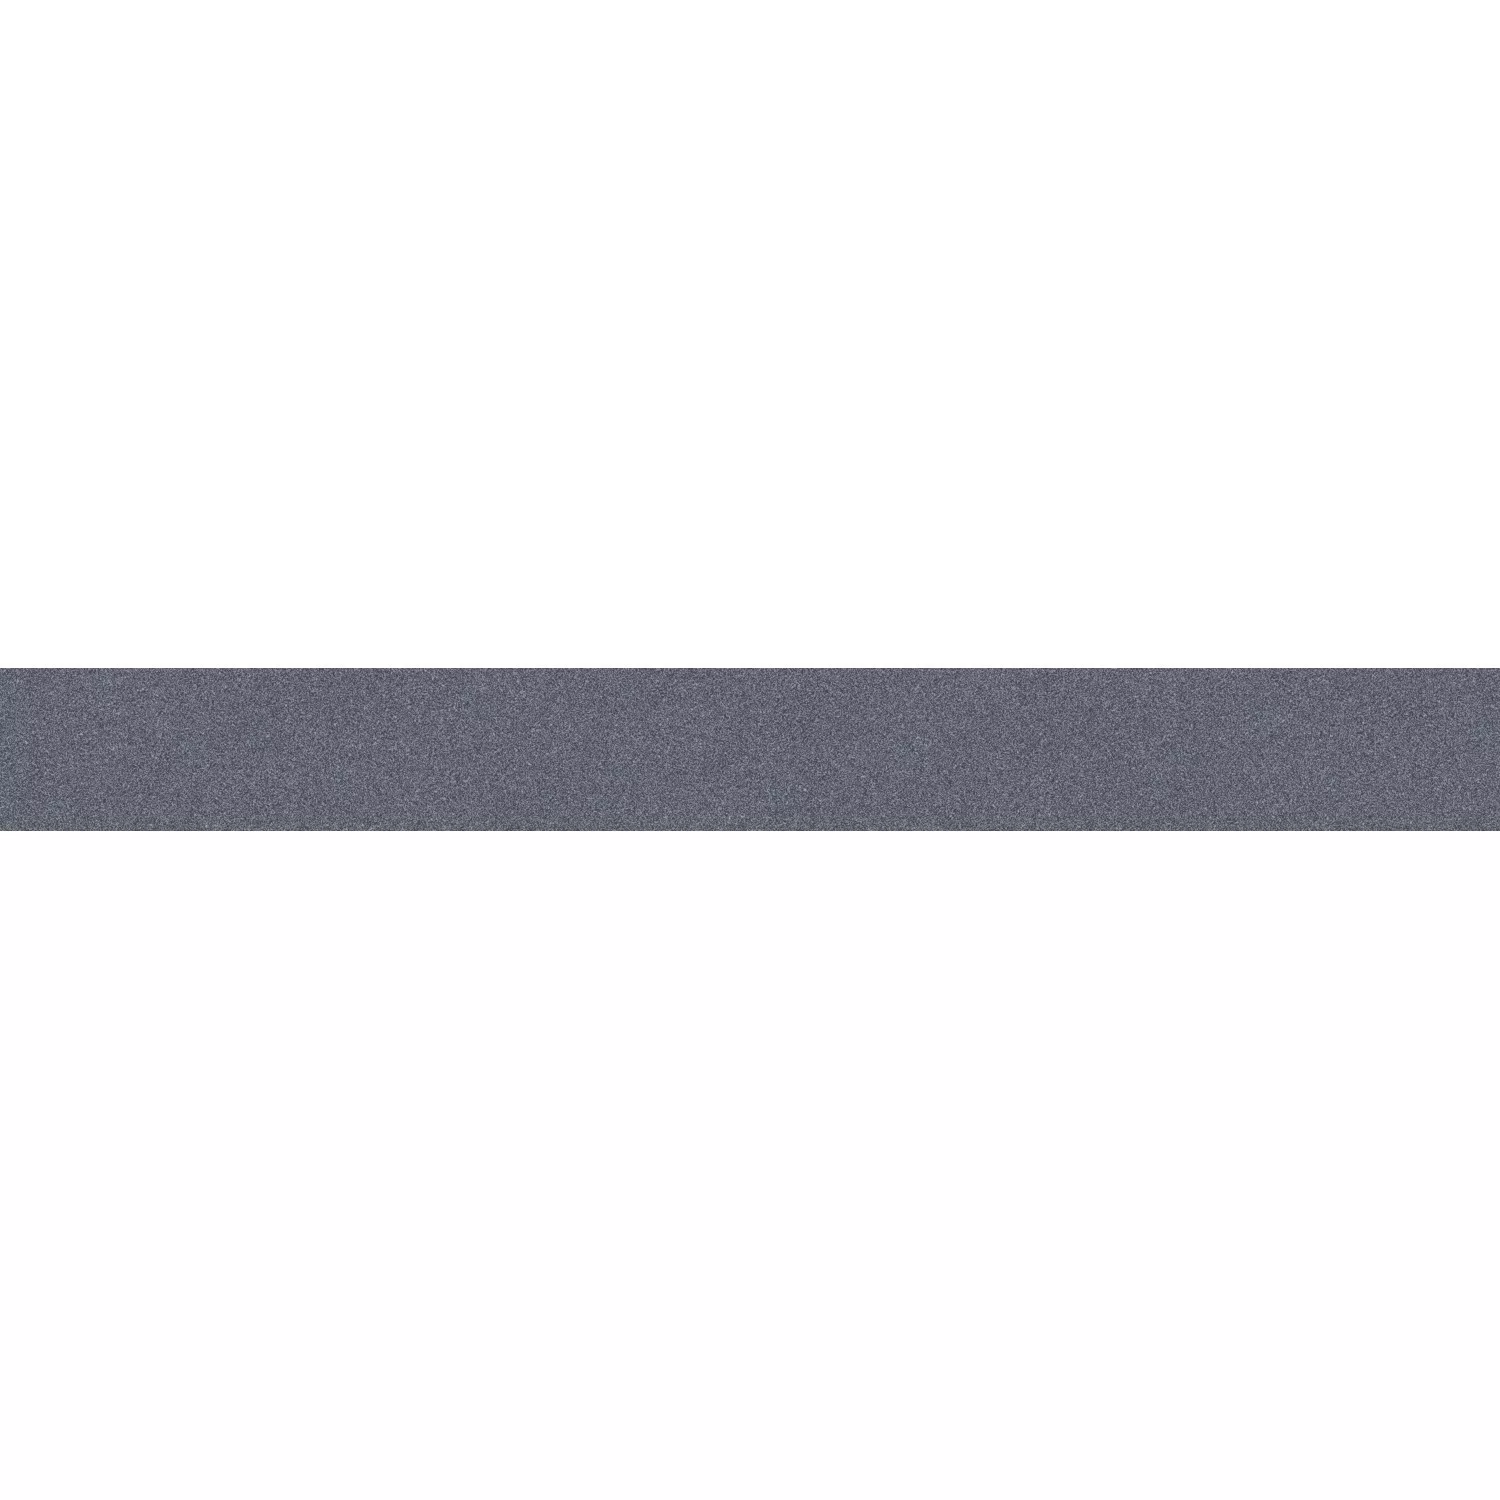 Vabene Sockel Bellissima Azzurro 6,5 cm x 60 cm günstig online kaufen